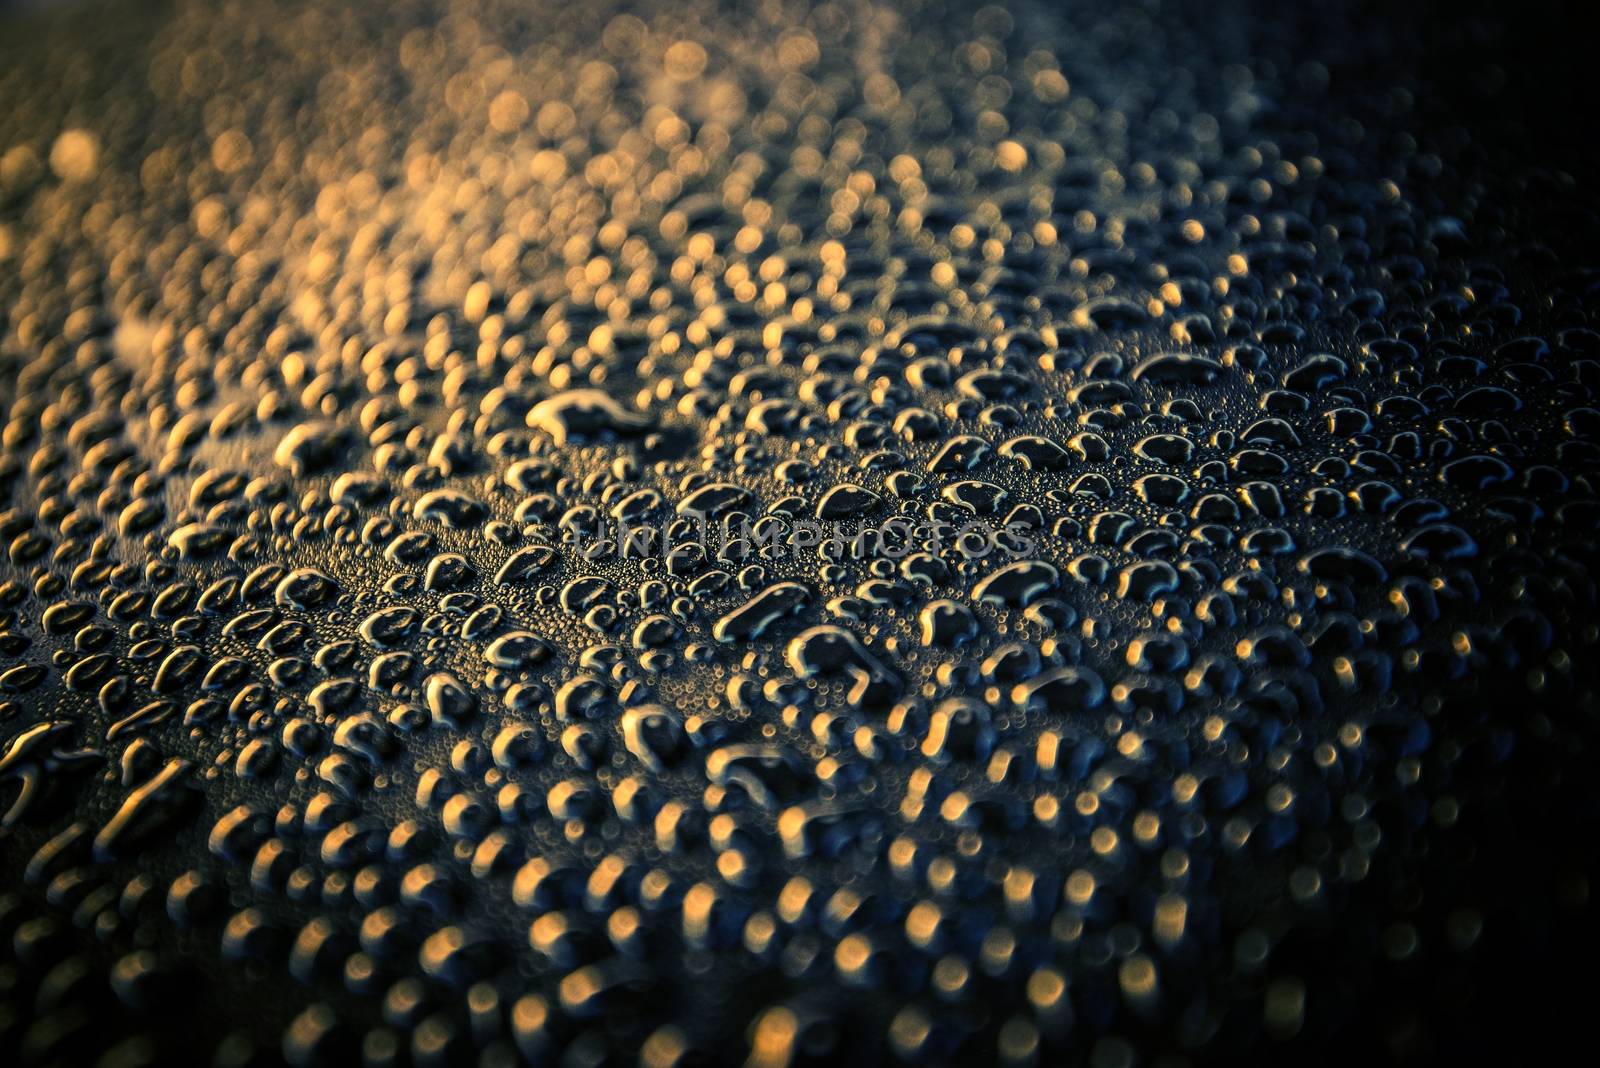 Water Drops on a Car Body After Car Washing. Car Wash Theme.